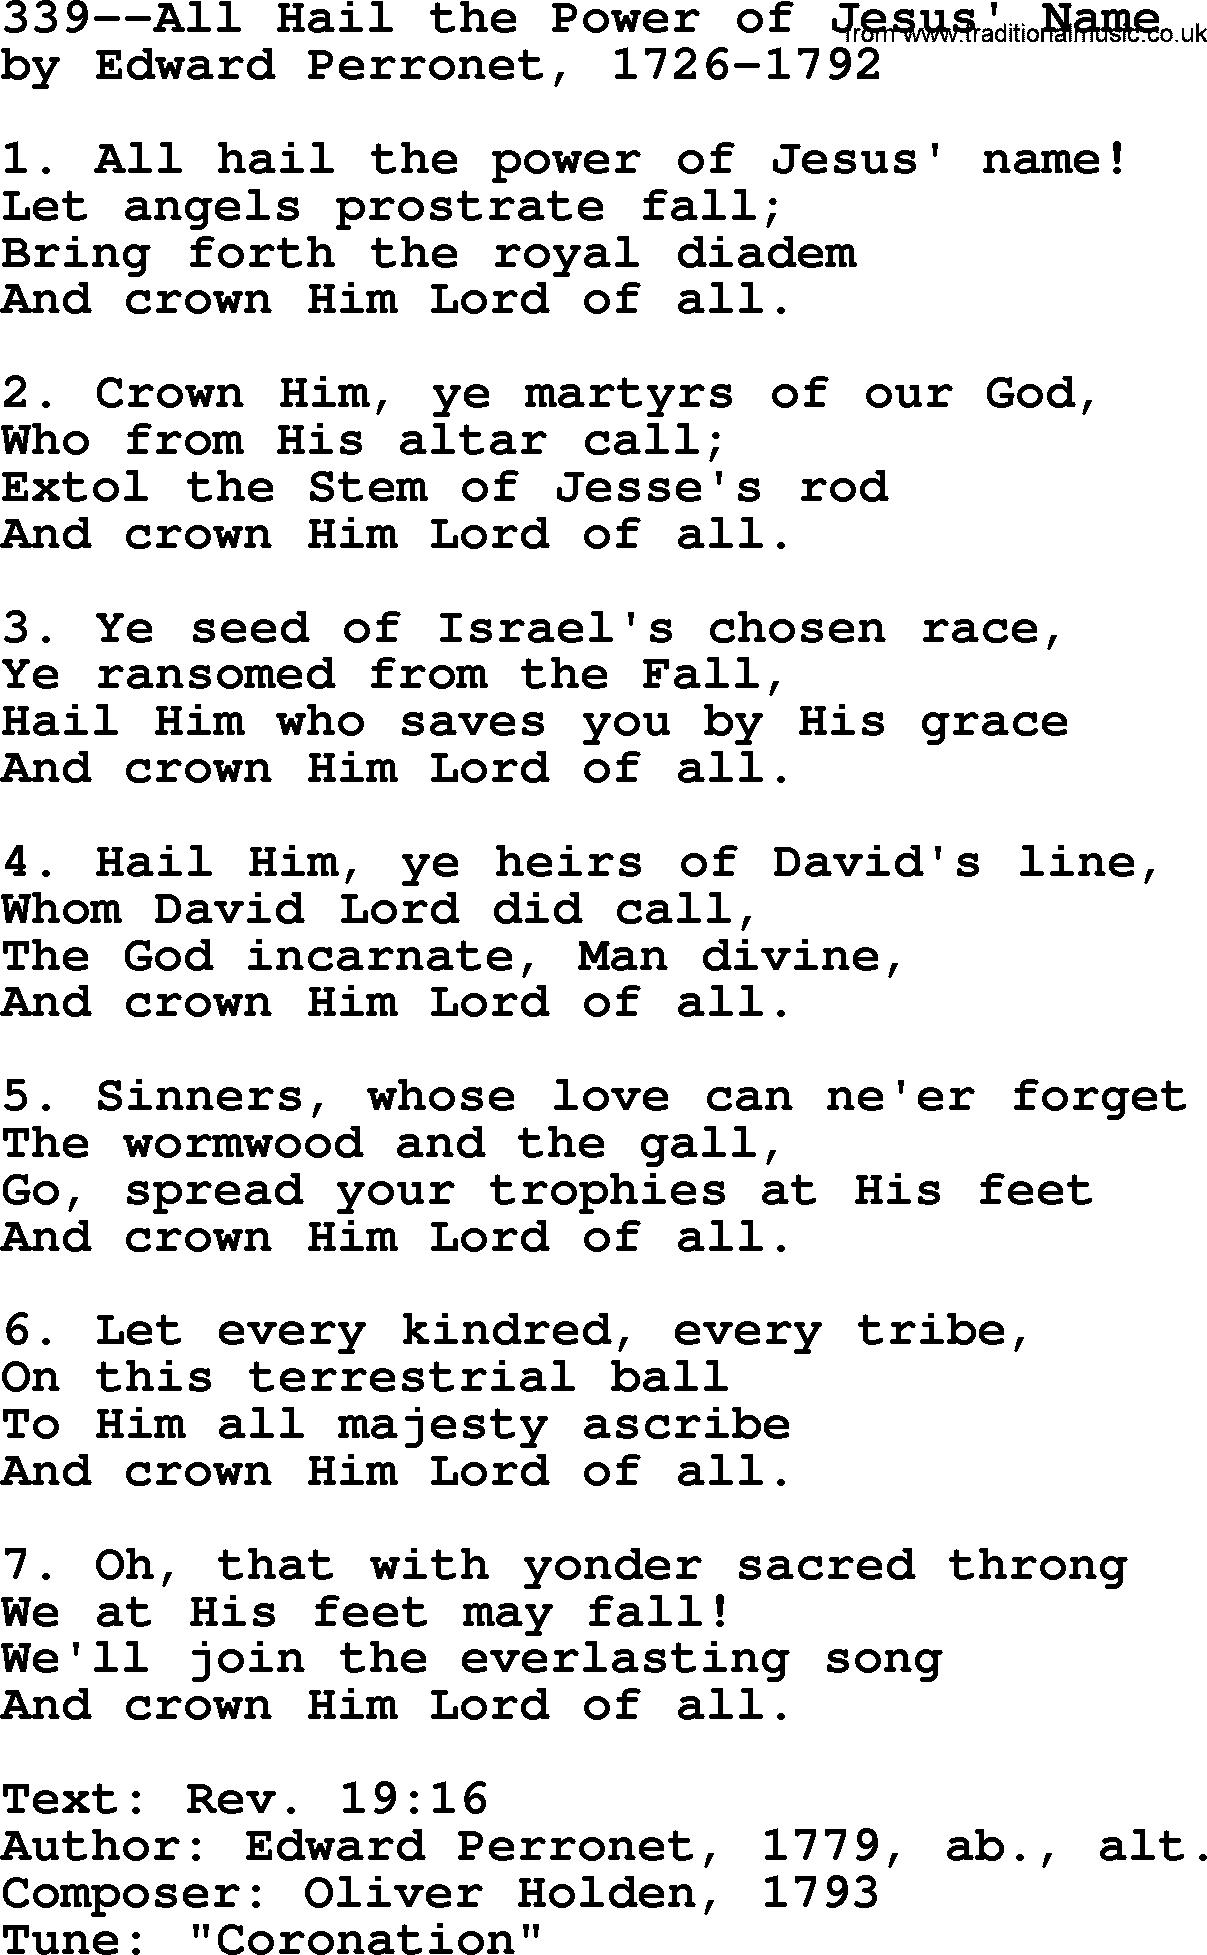 Lutheran Hymn: 339--All Hail the Power of Jesus' Name.txt lyrics with PDF